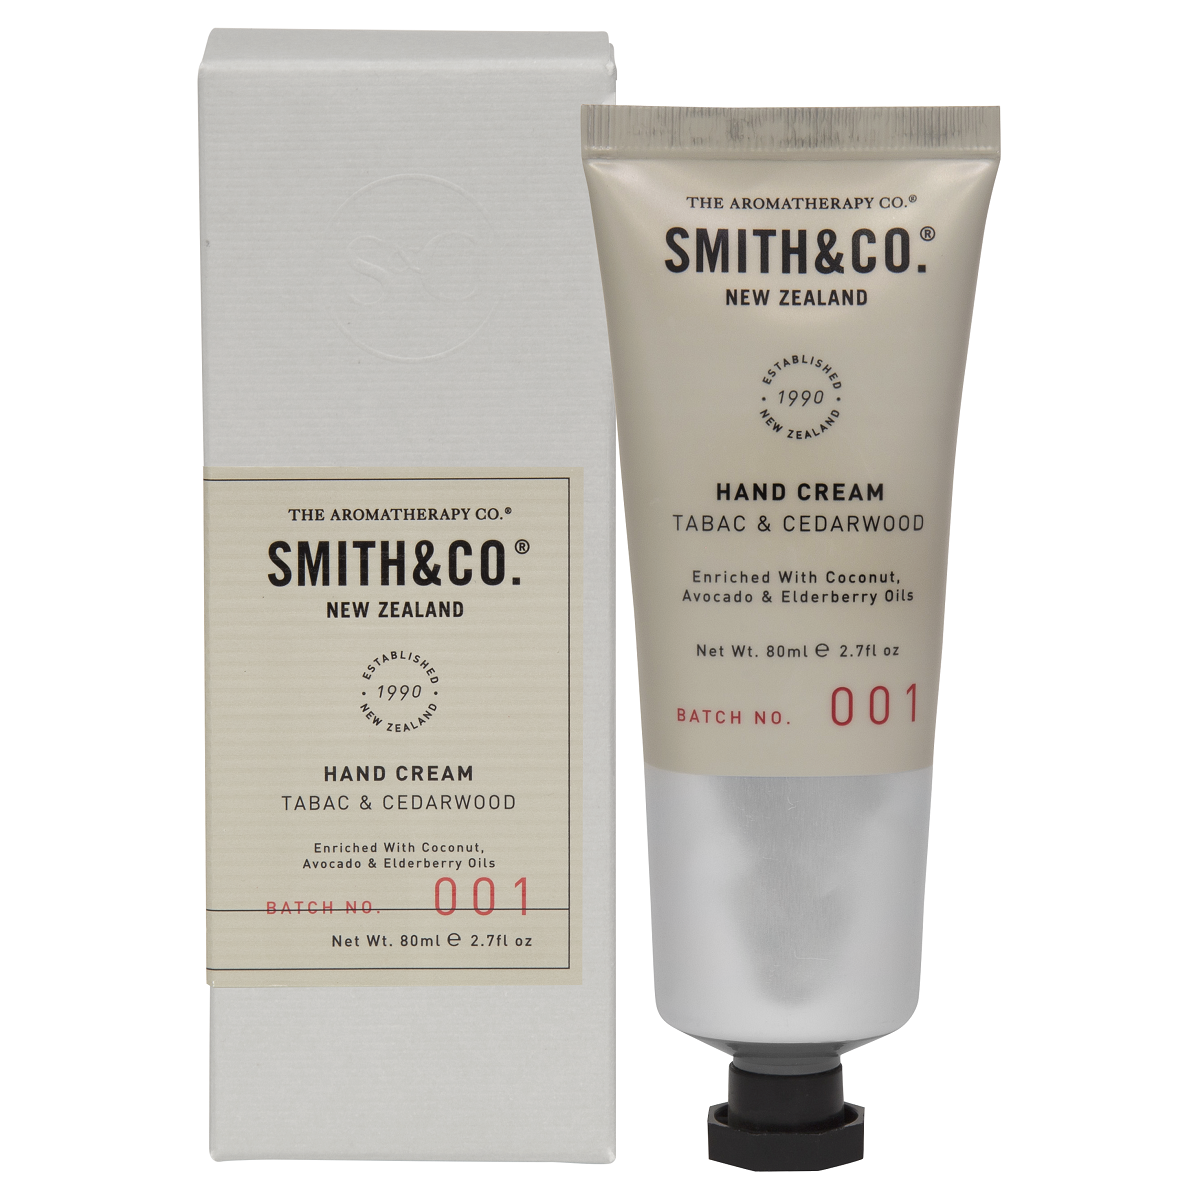 Smith & Co 80ml hand cream - Tabac & Cedarwood